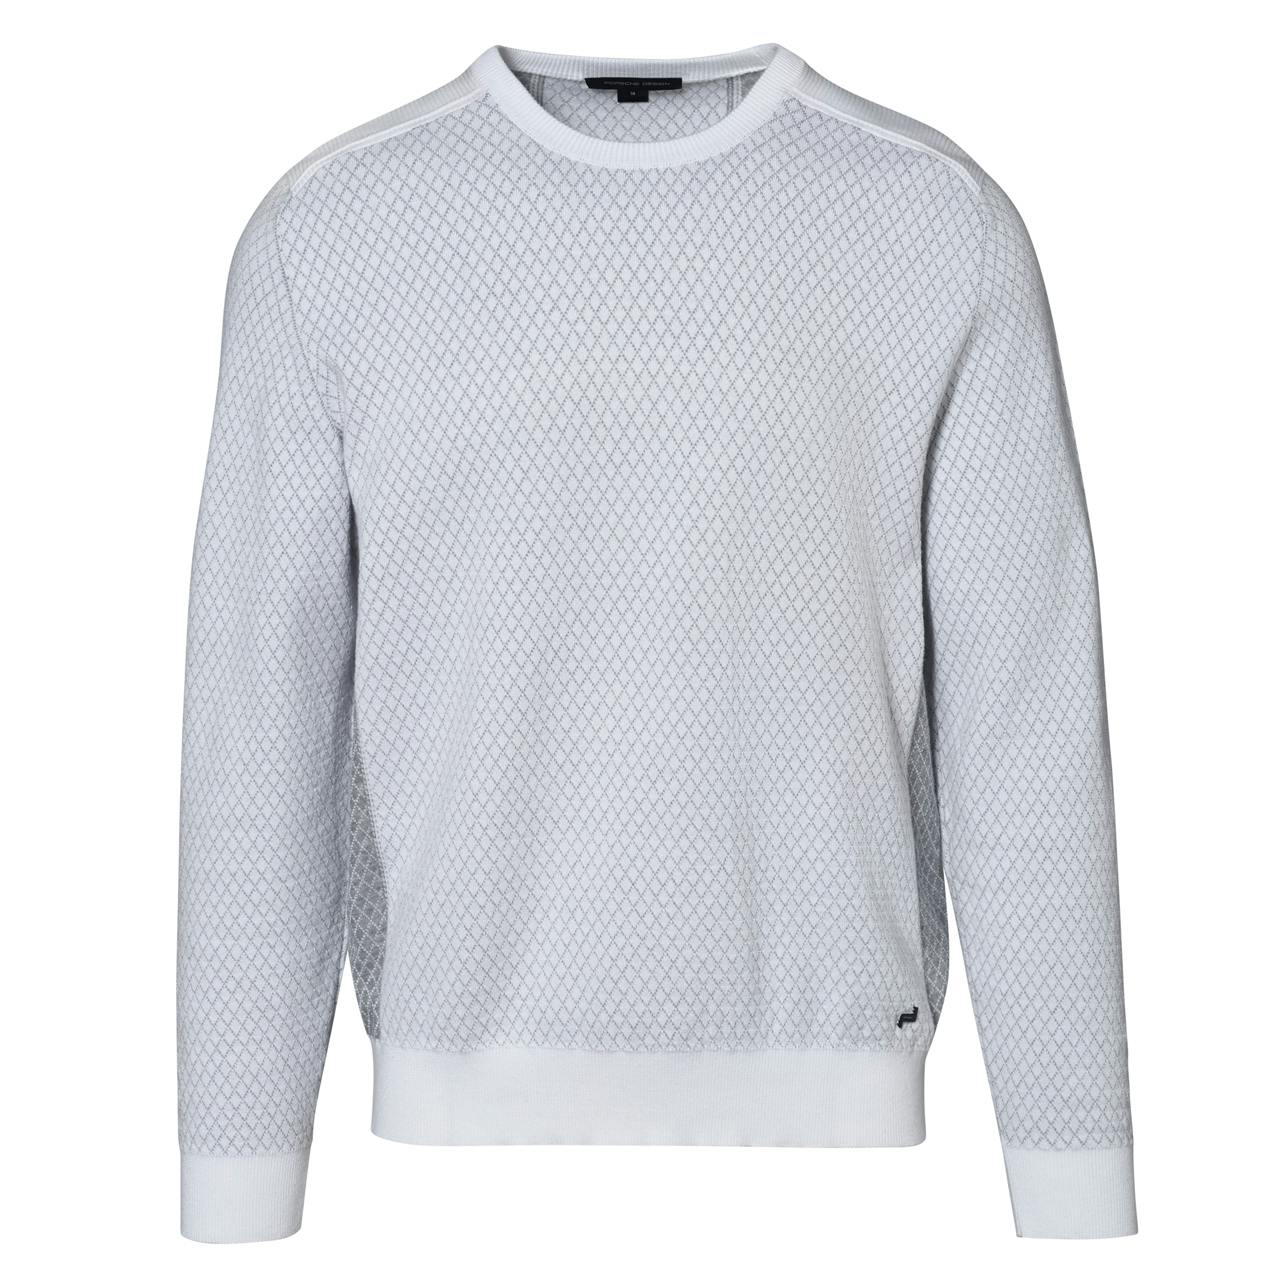 Porsche Design_SS20_M Double Effected Sweater, bright white combo, 325€